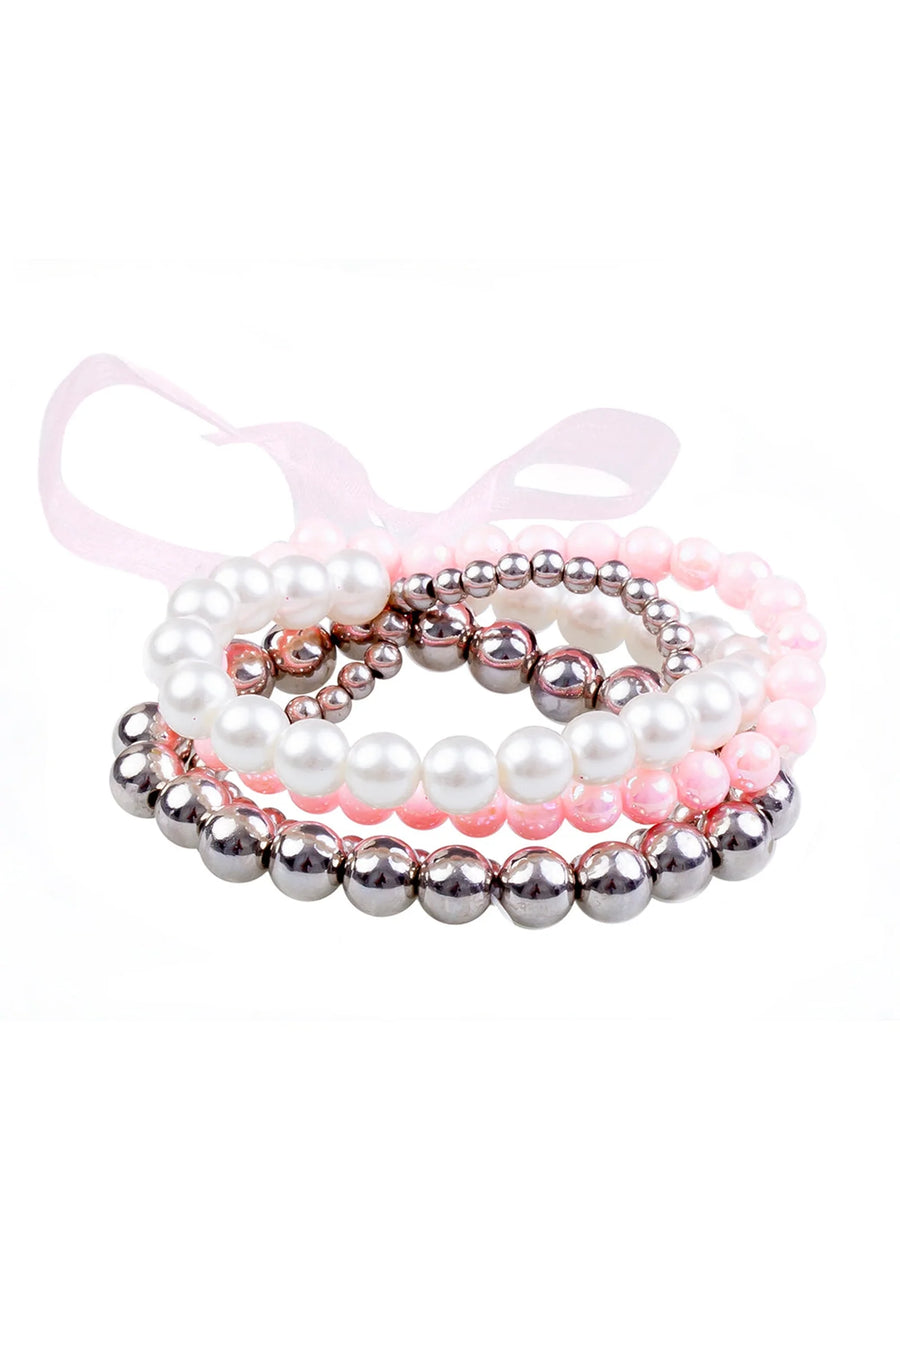 Great Pretenders Pearly to Wed Bracelets - Set of 4 |Mockingbird Baby & Kids